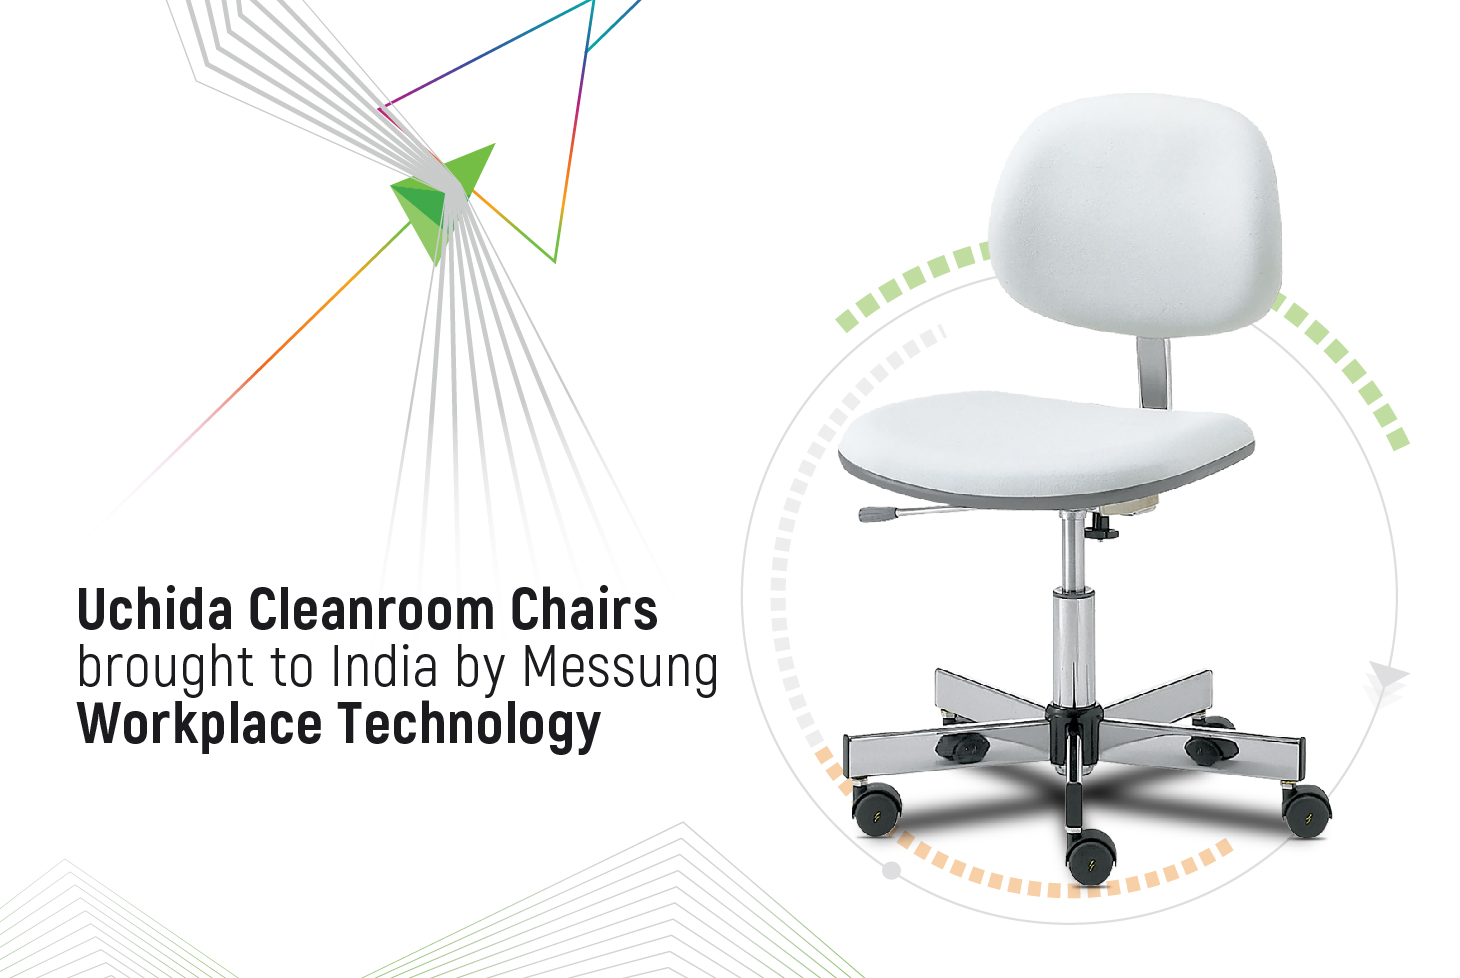 Cleanroom chair